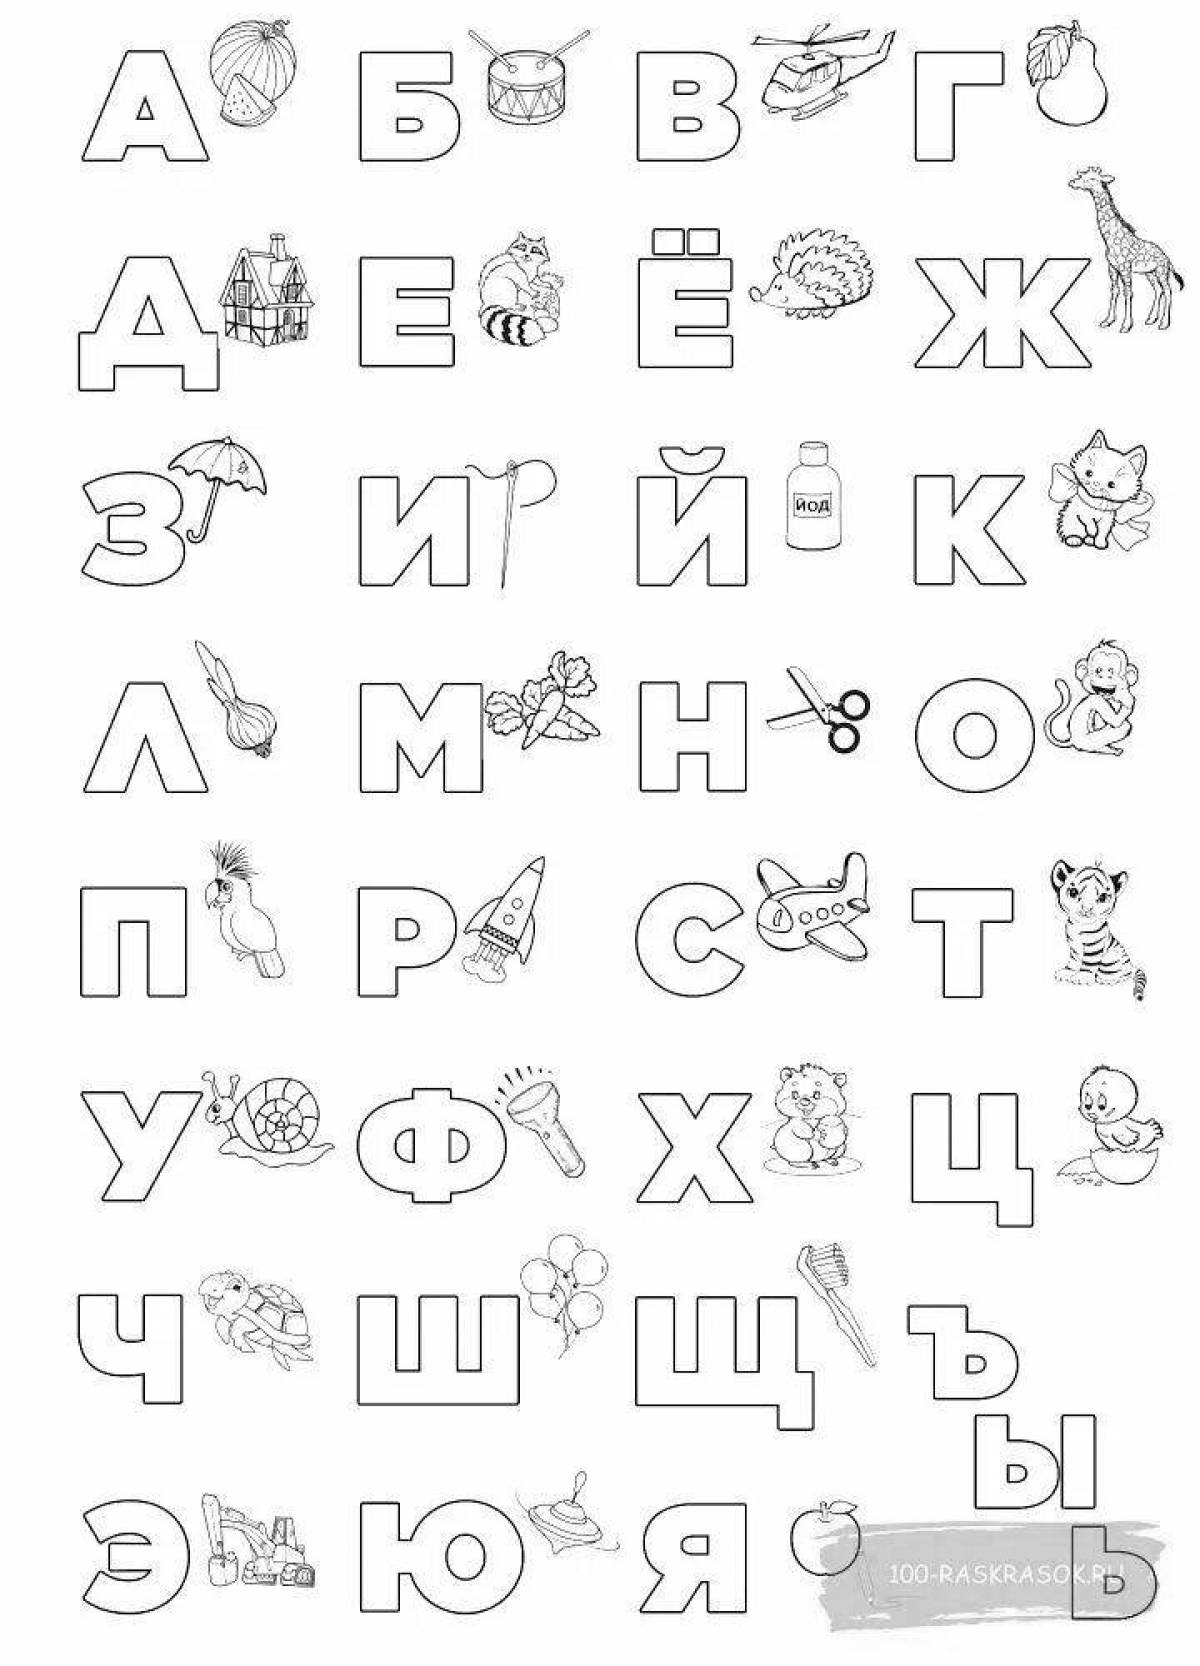 Alphabet for children 4 5 years old #12